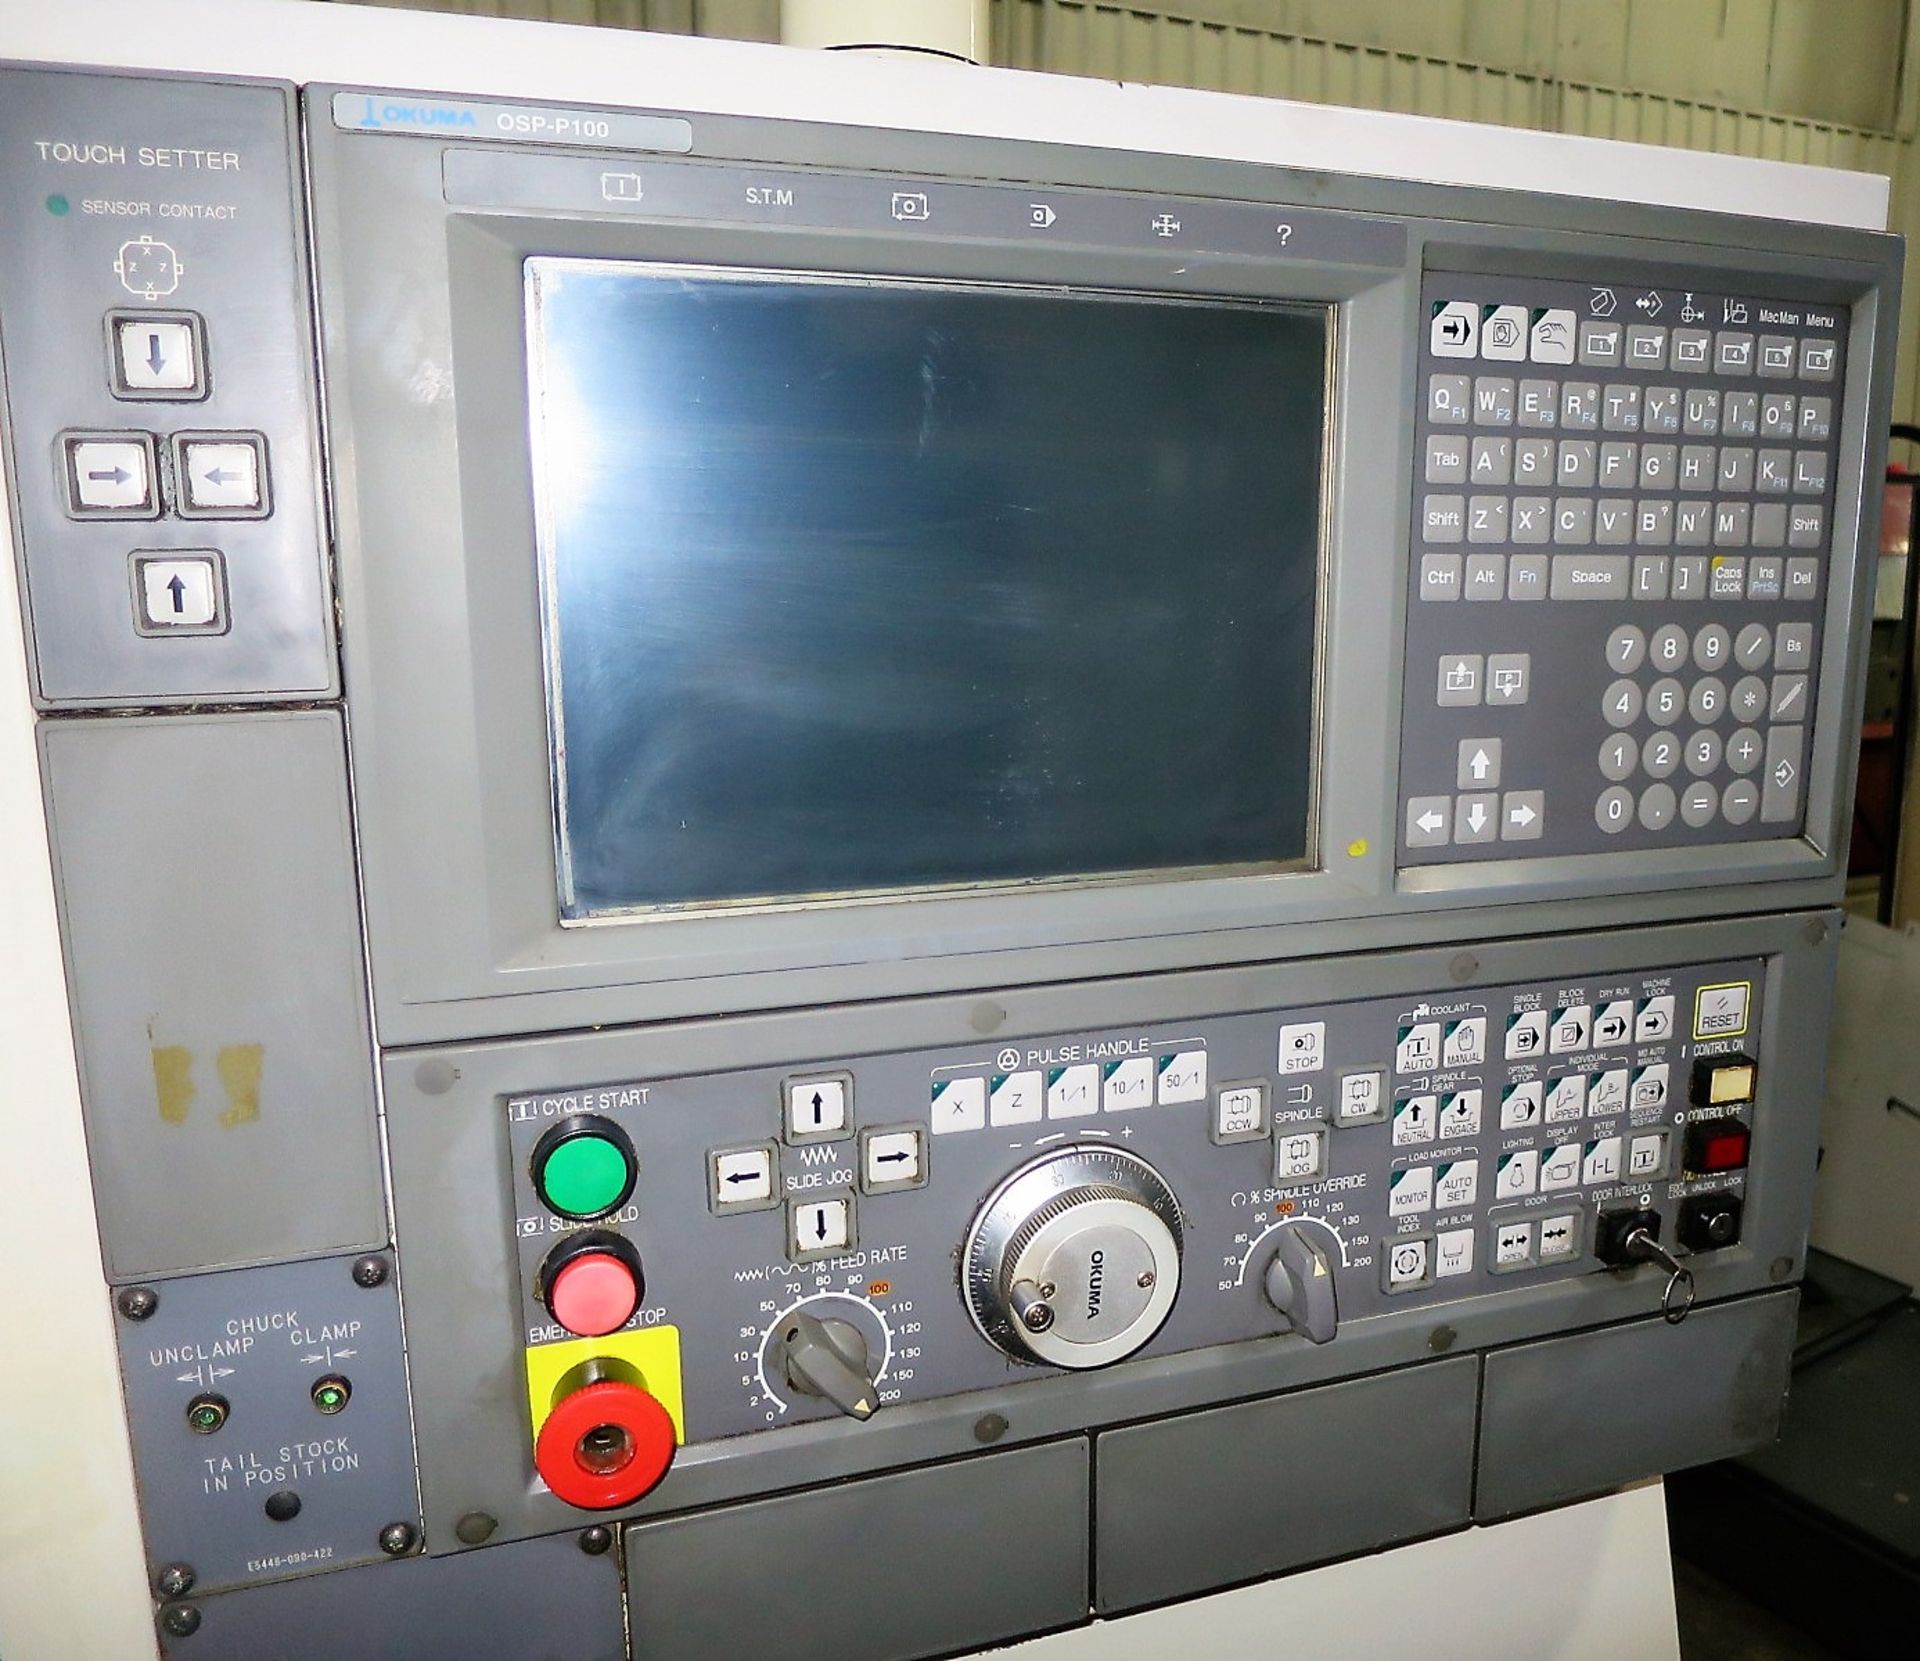 Okuma Captain L370 2-Axis CNC Turning Center Lathe, S/N 116573, New 2005 - Image 2 of 10